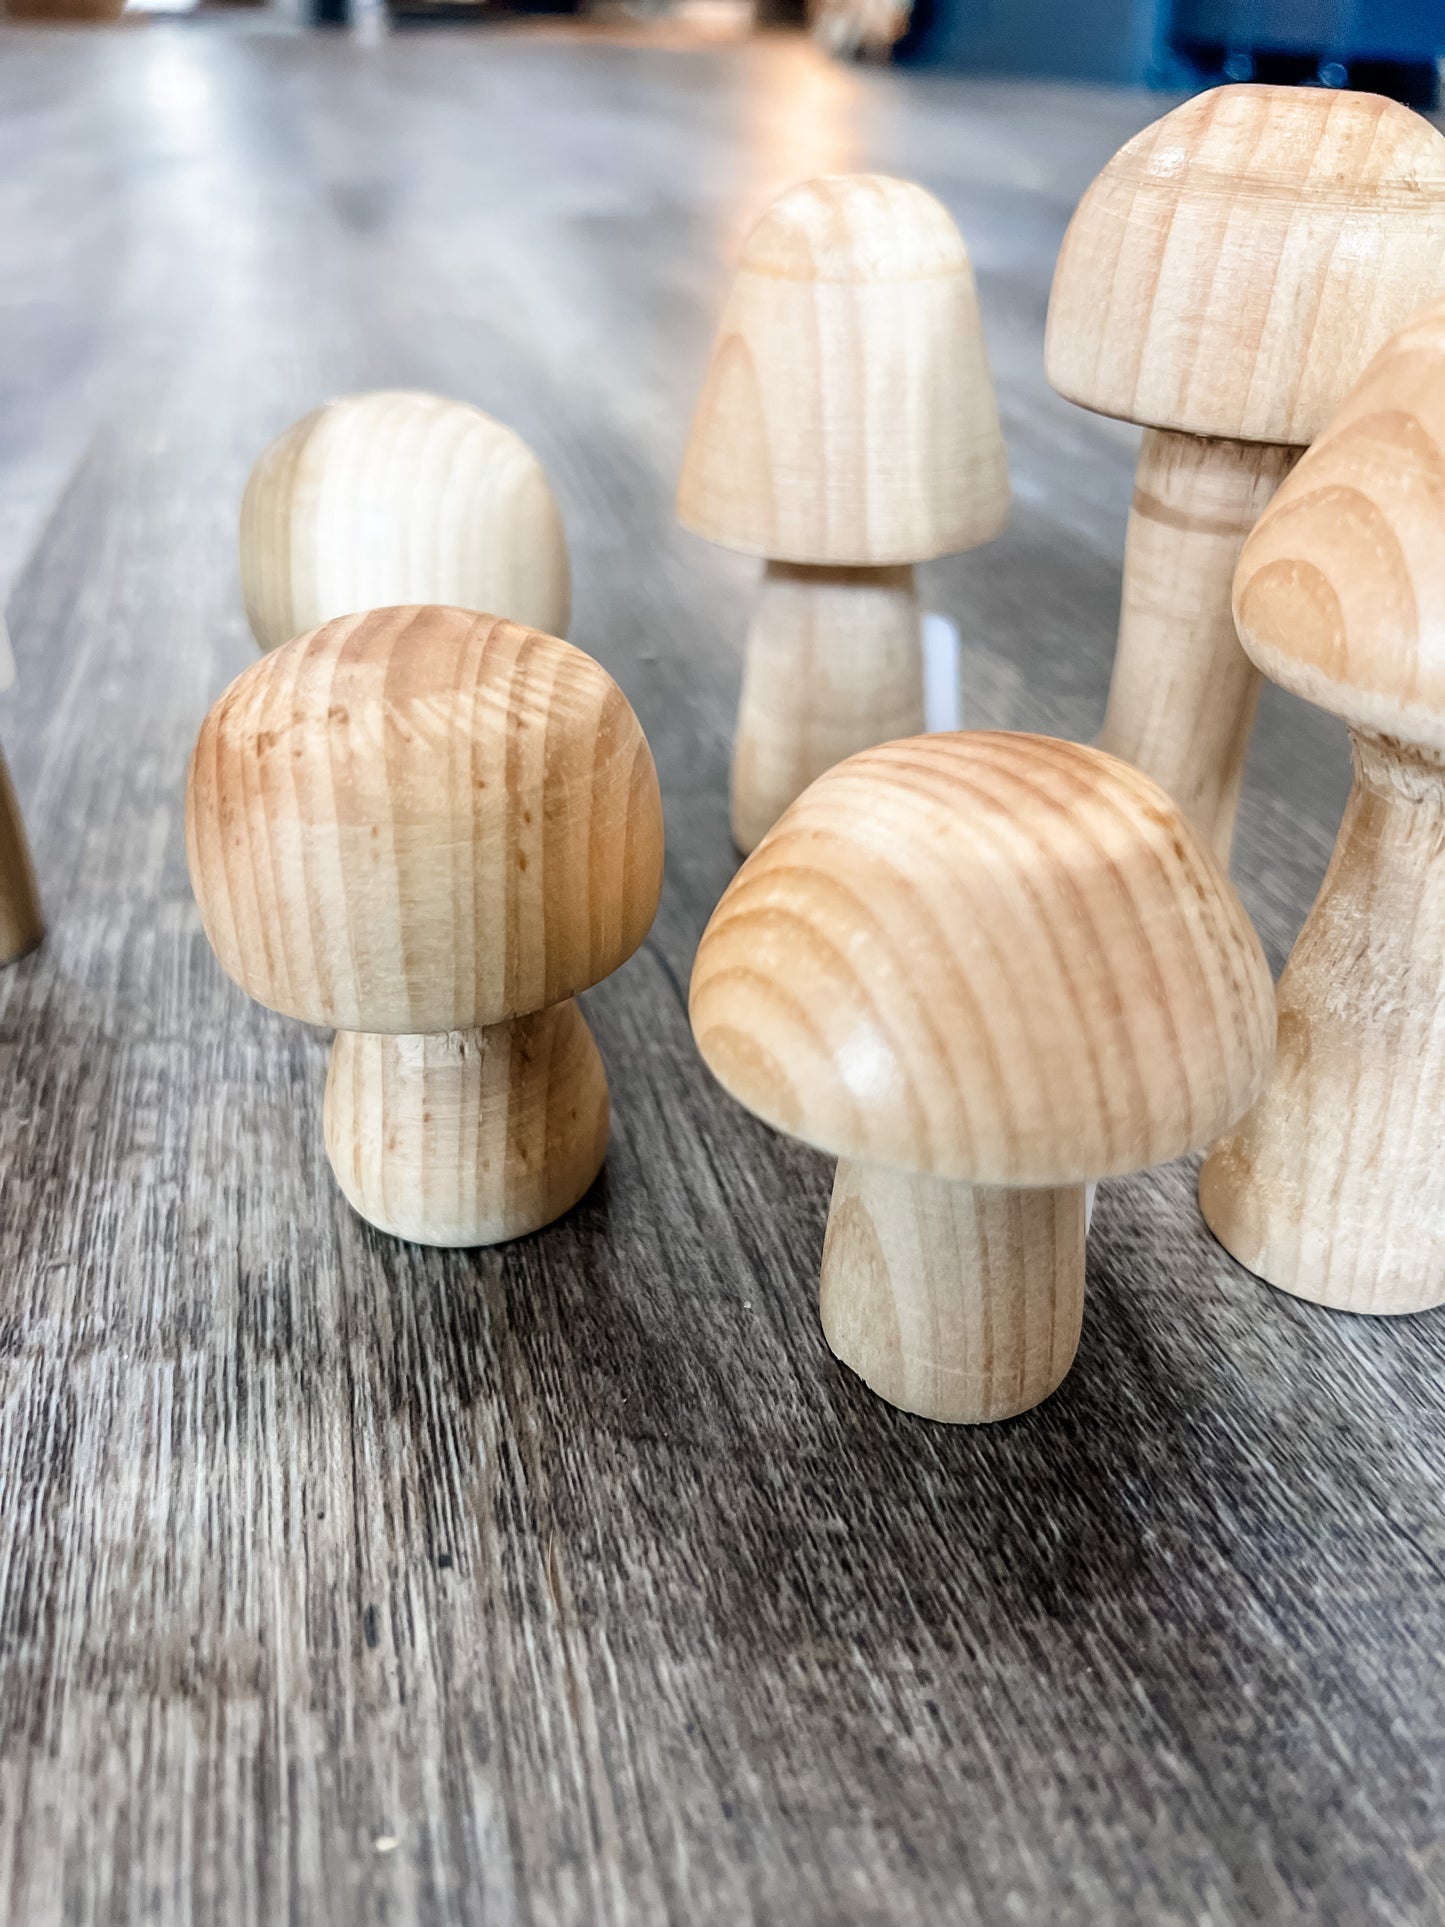 Tiny Wooden Mushroom